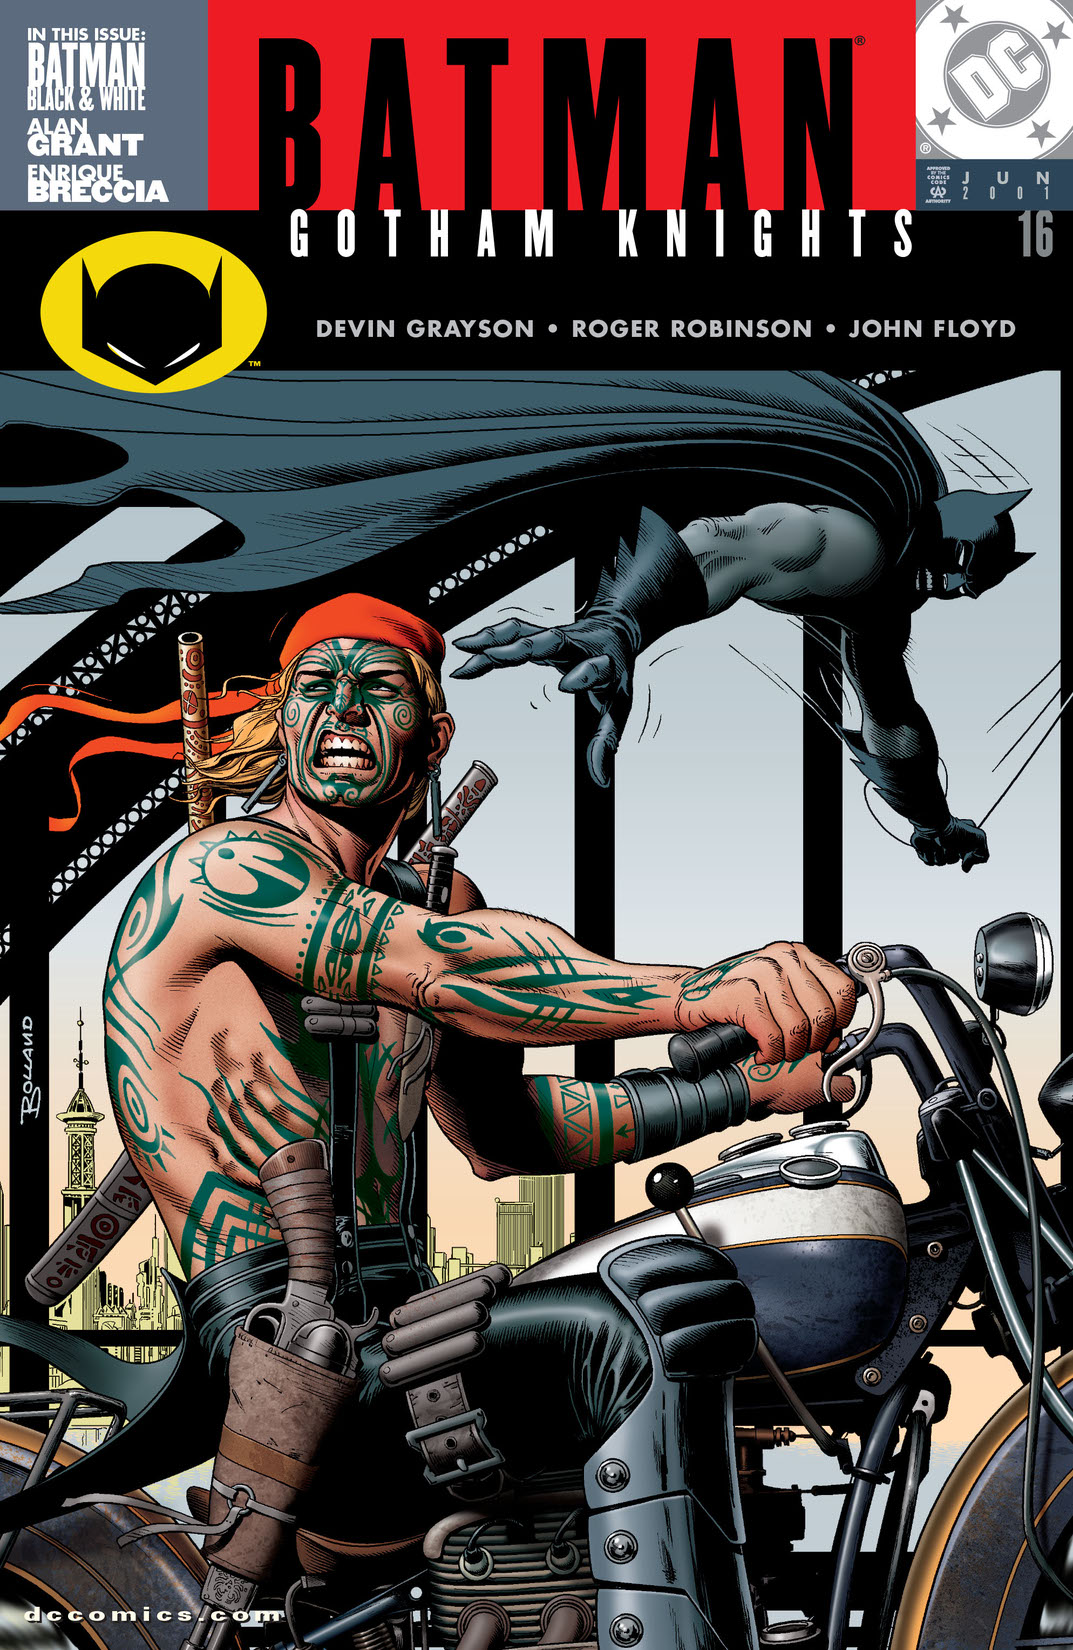 Batman: Gotham Knights #16 preview images